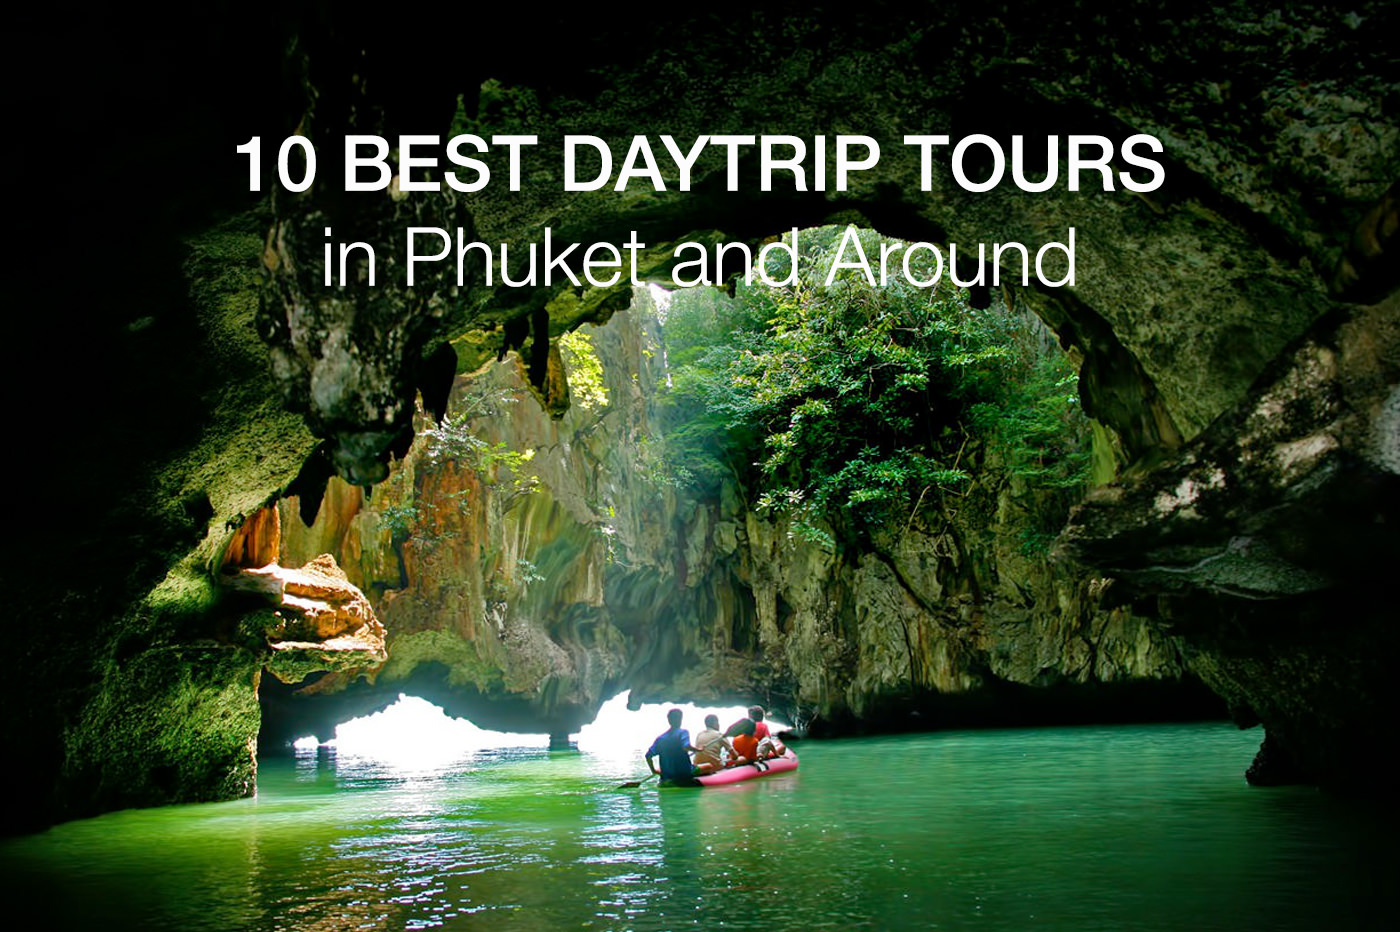 dz phuket tour travel